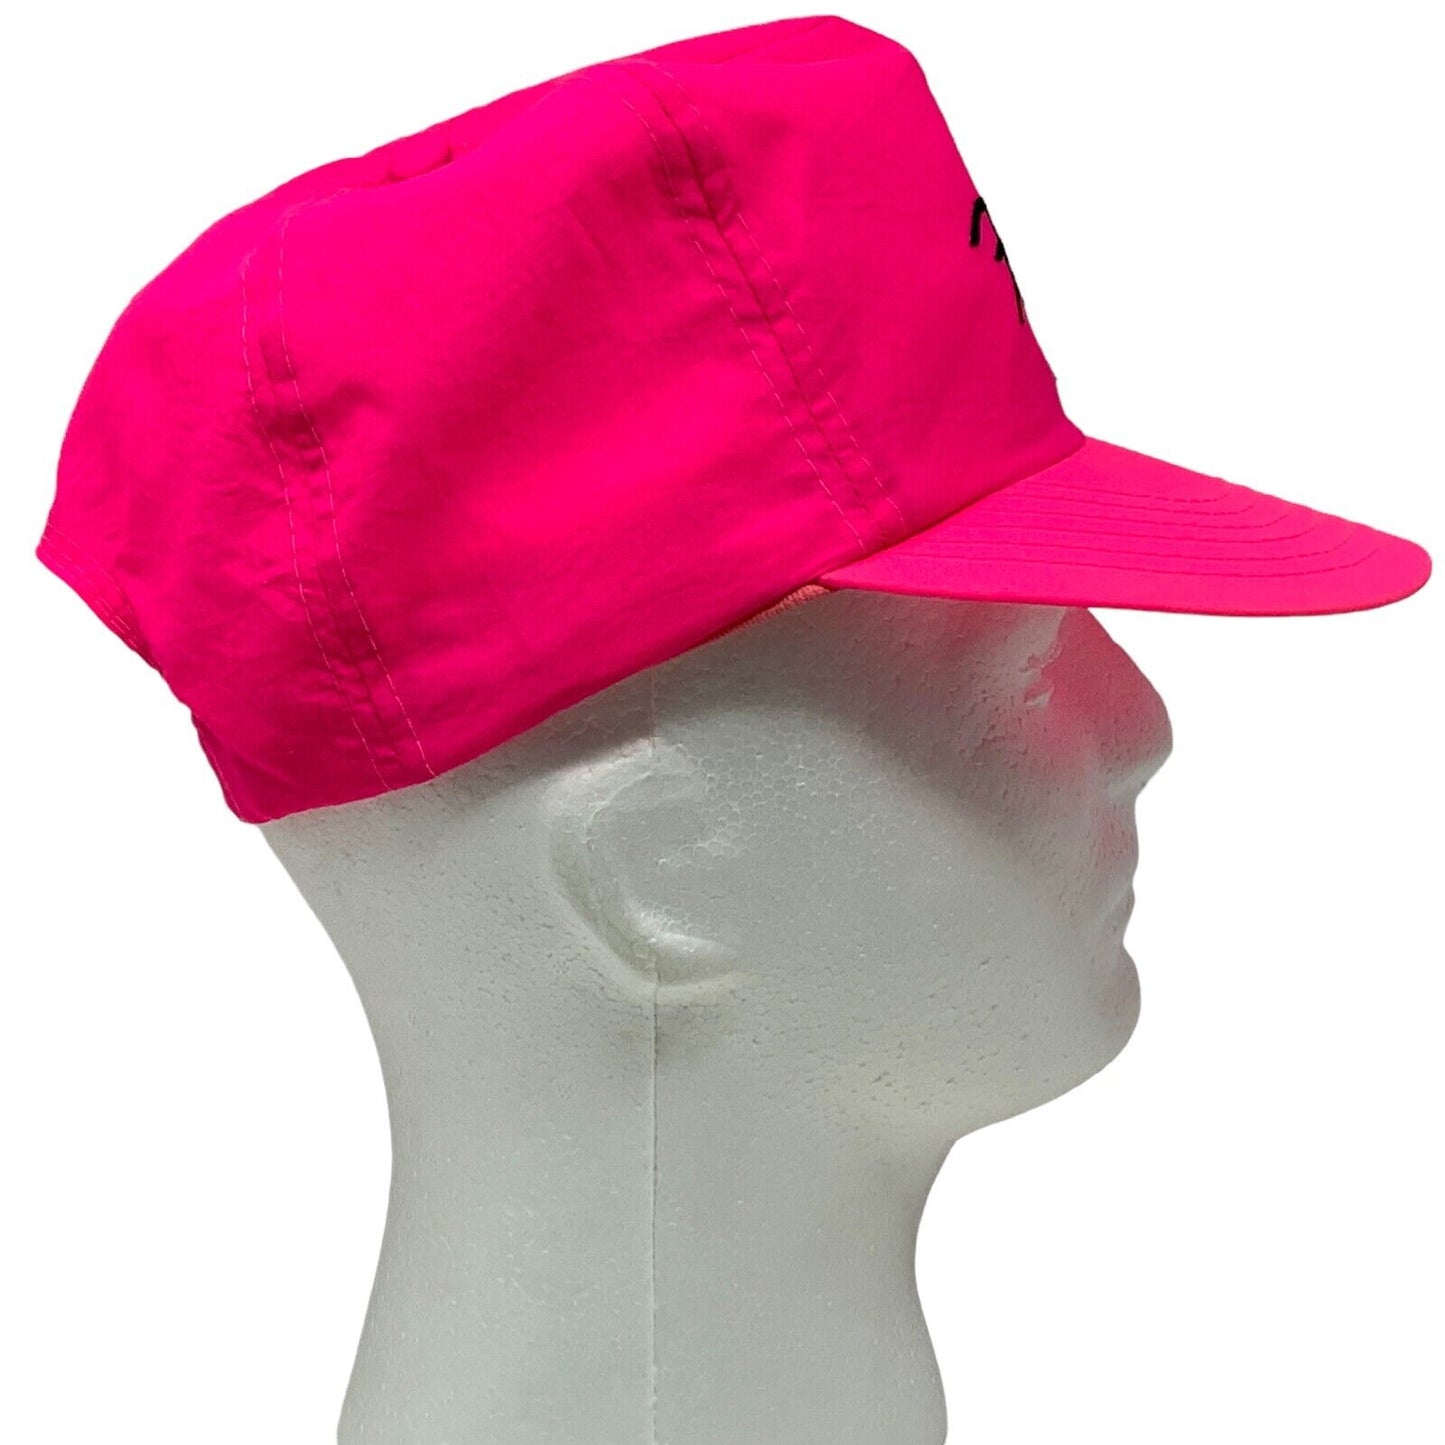 Vintage 90s Flamingo Hilton Hotel Casino Snapback Hat Laughlin Pink Baseball Cap